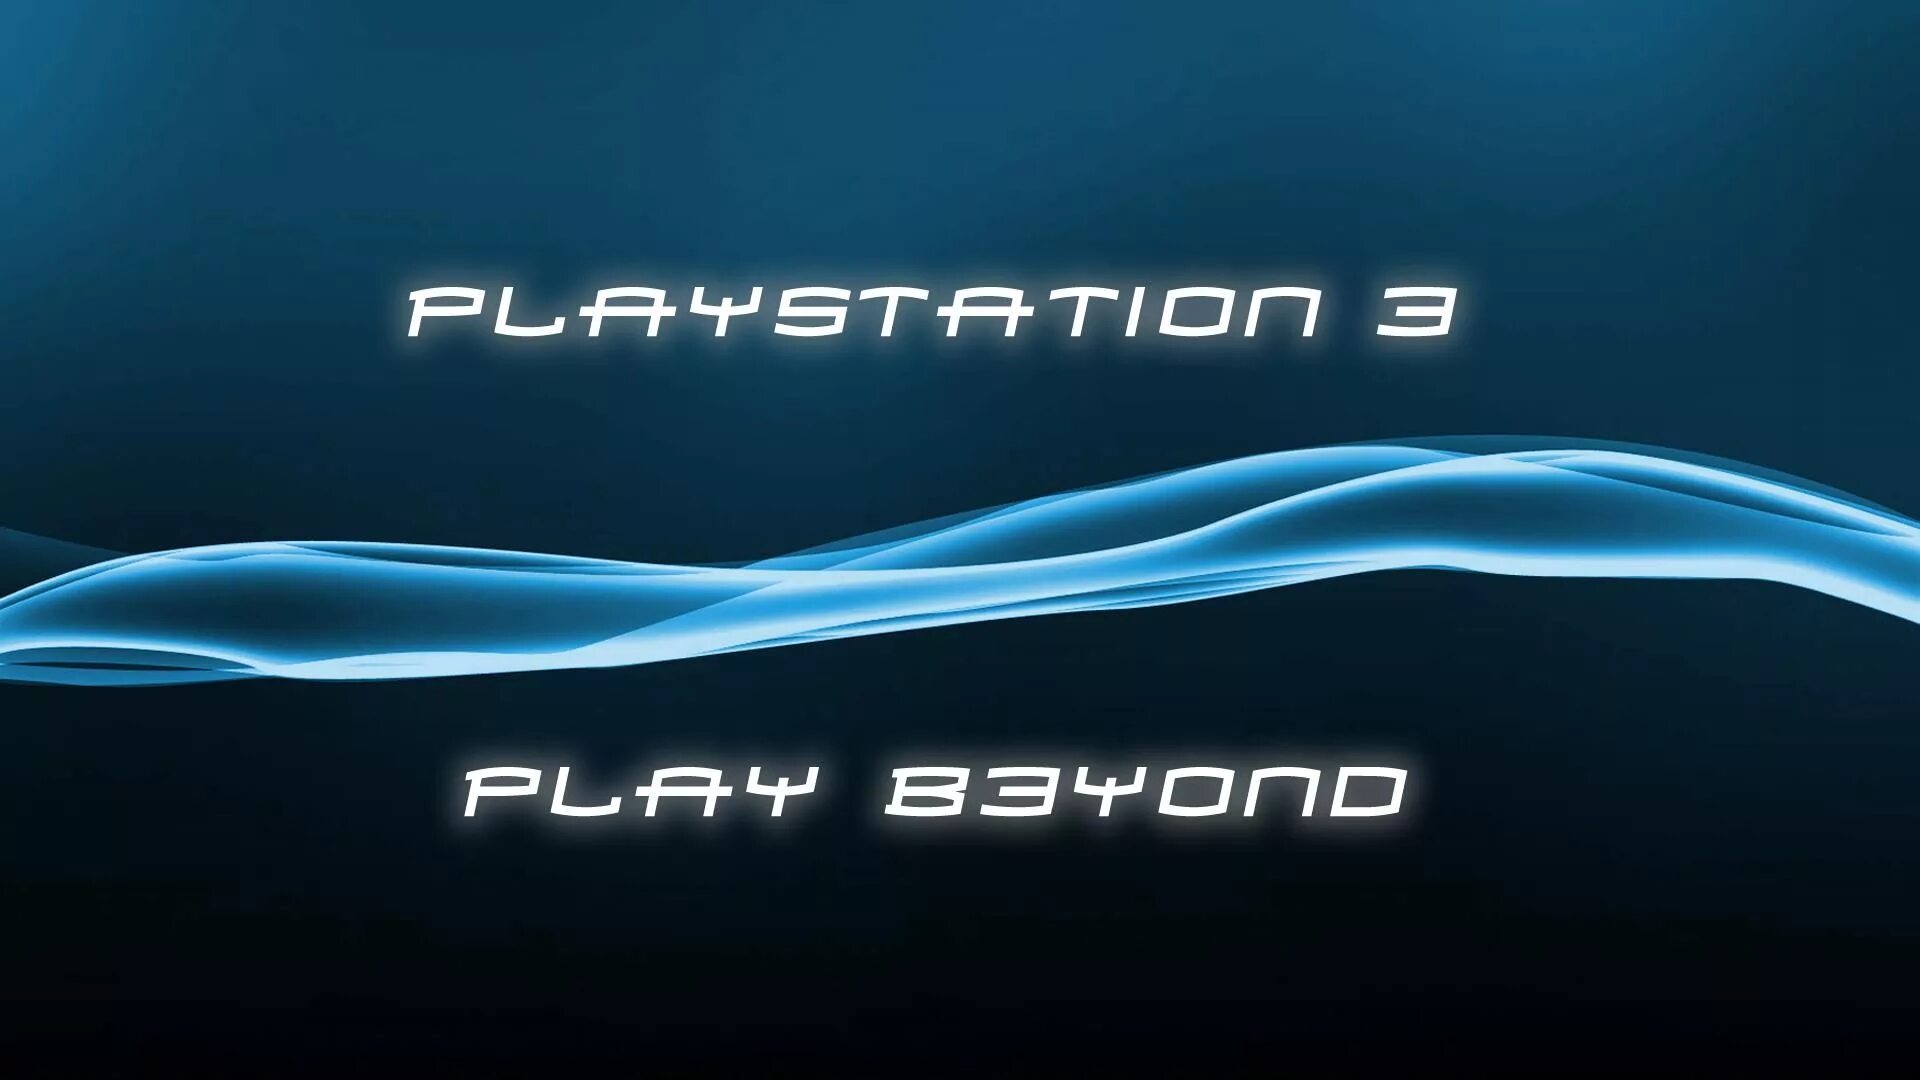 Sony ps3 logo. Обои на рабочий стол PLAYSTATION. PLAYSTATION 3 фон. Ps3 заставка. Play ps3